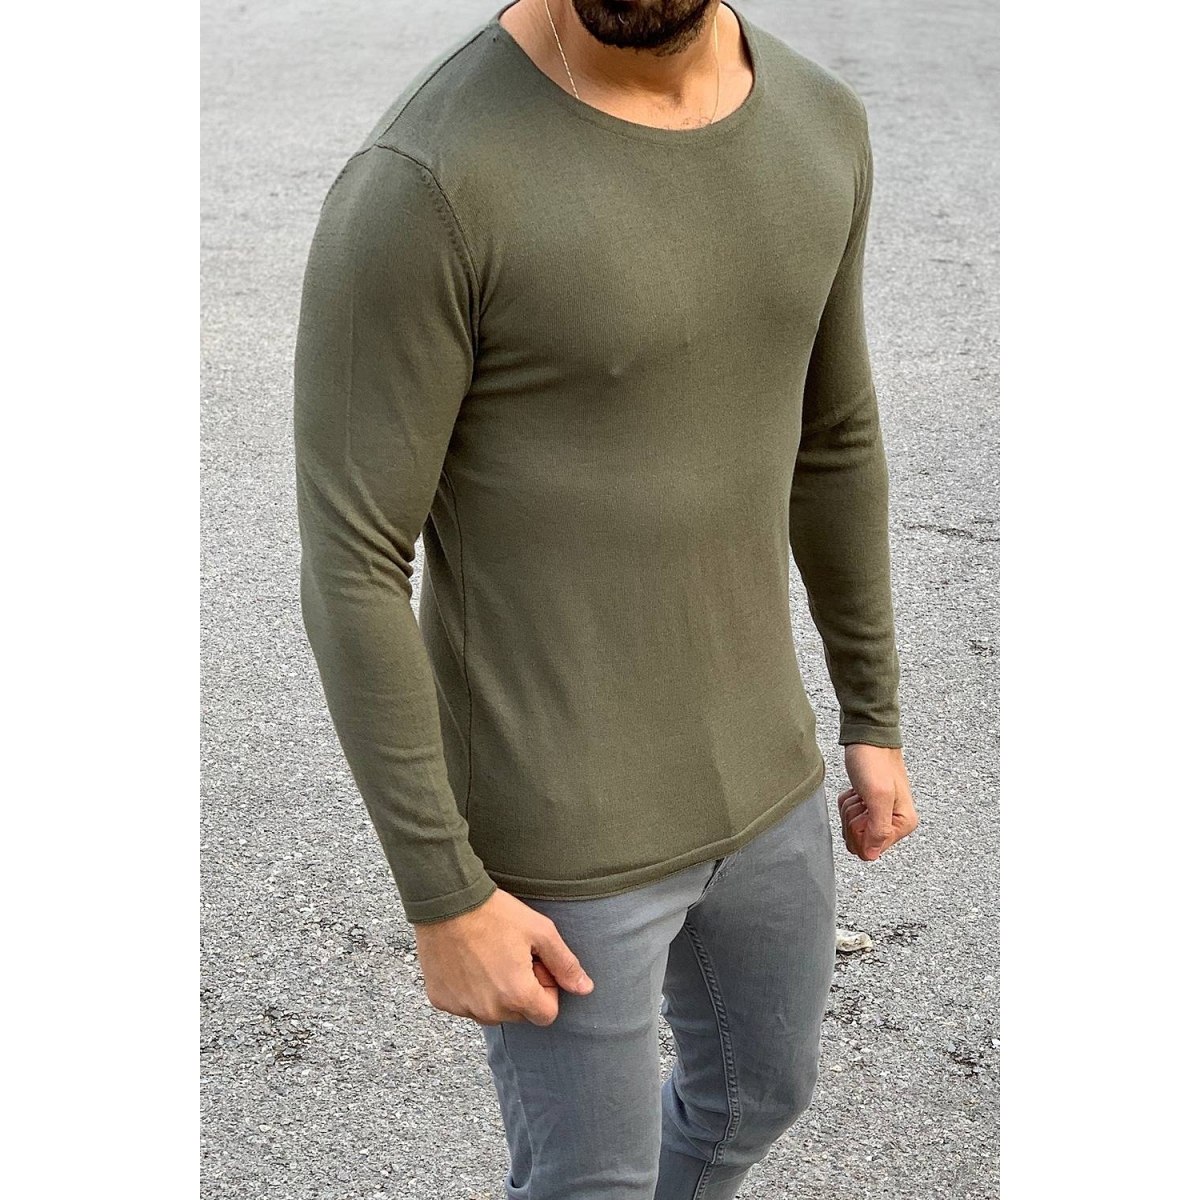 Men's Basic Spring Sweatshirt In Khaki - 2